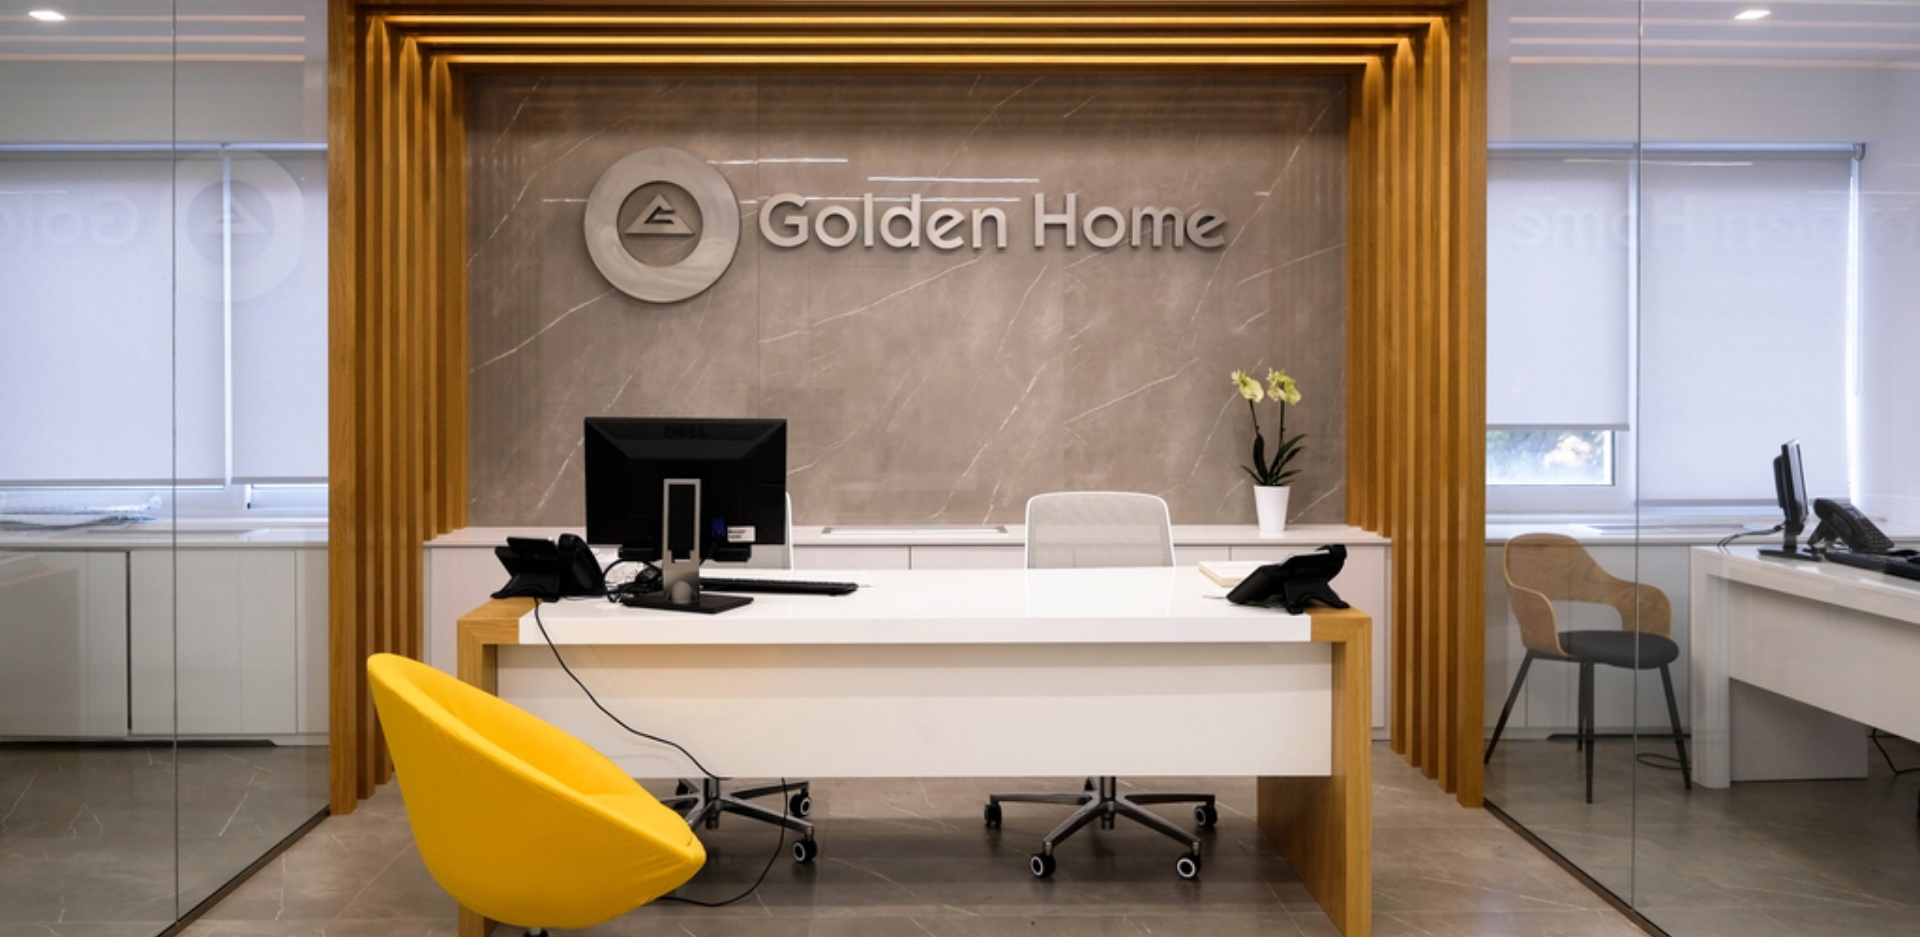 Golden Home: Η No1 Real Estate Εταιρεία στην  Ελλάδα,